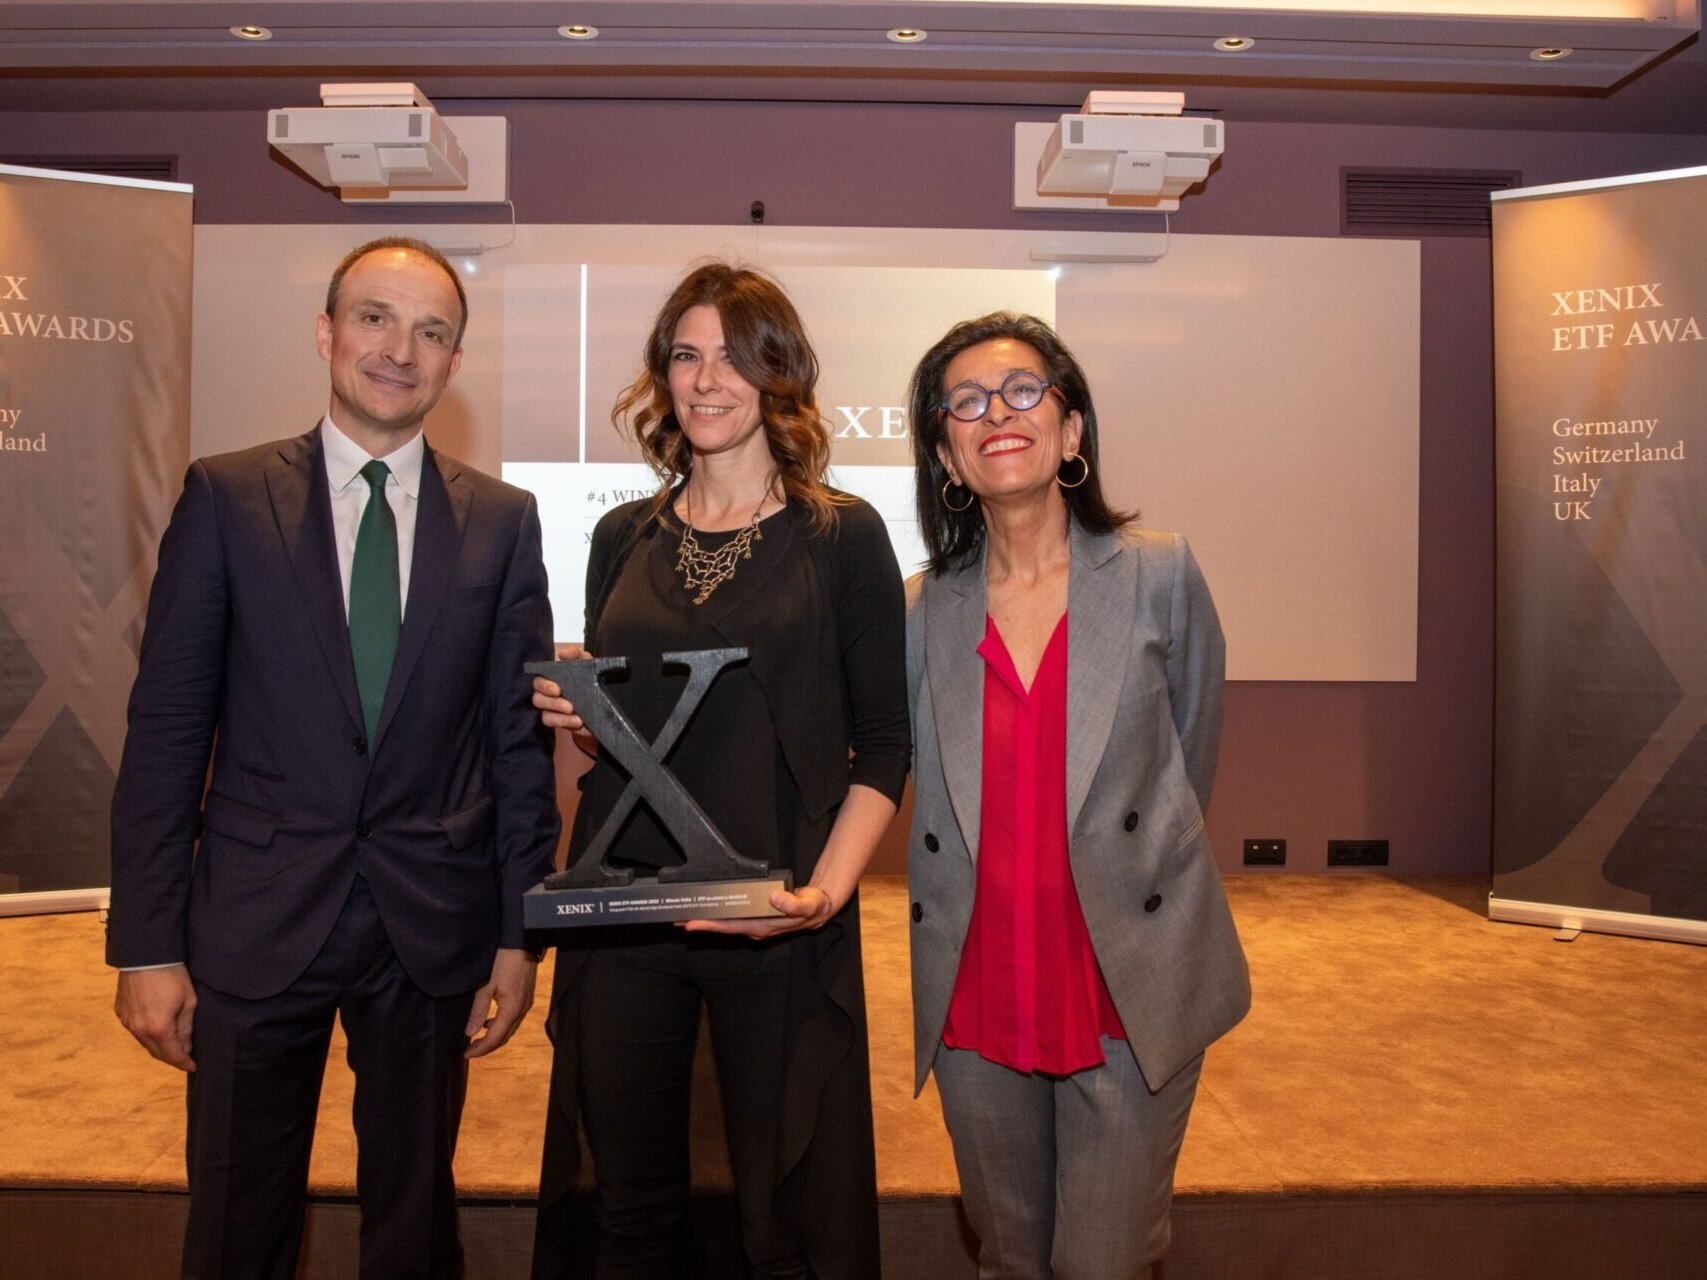 XENIX ETF Awards Italia 2022